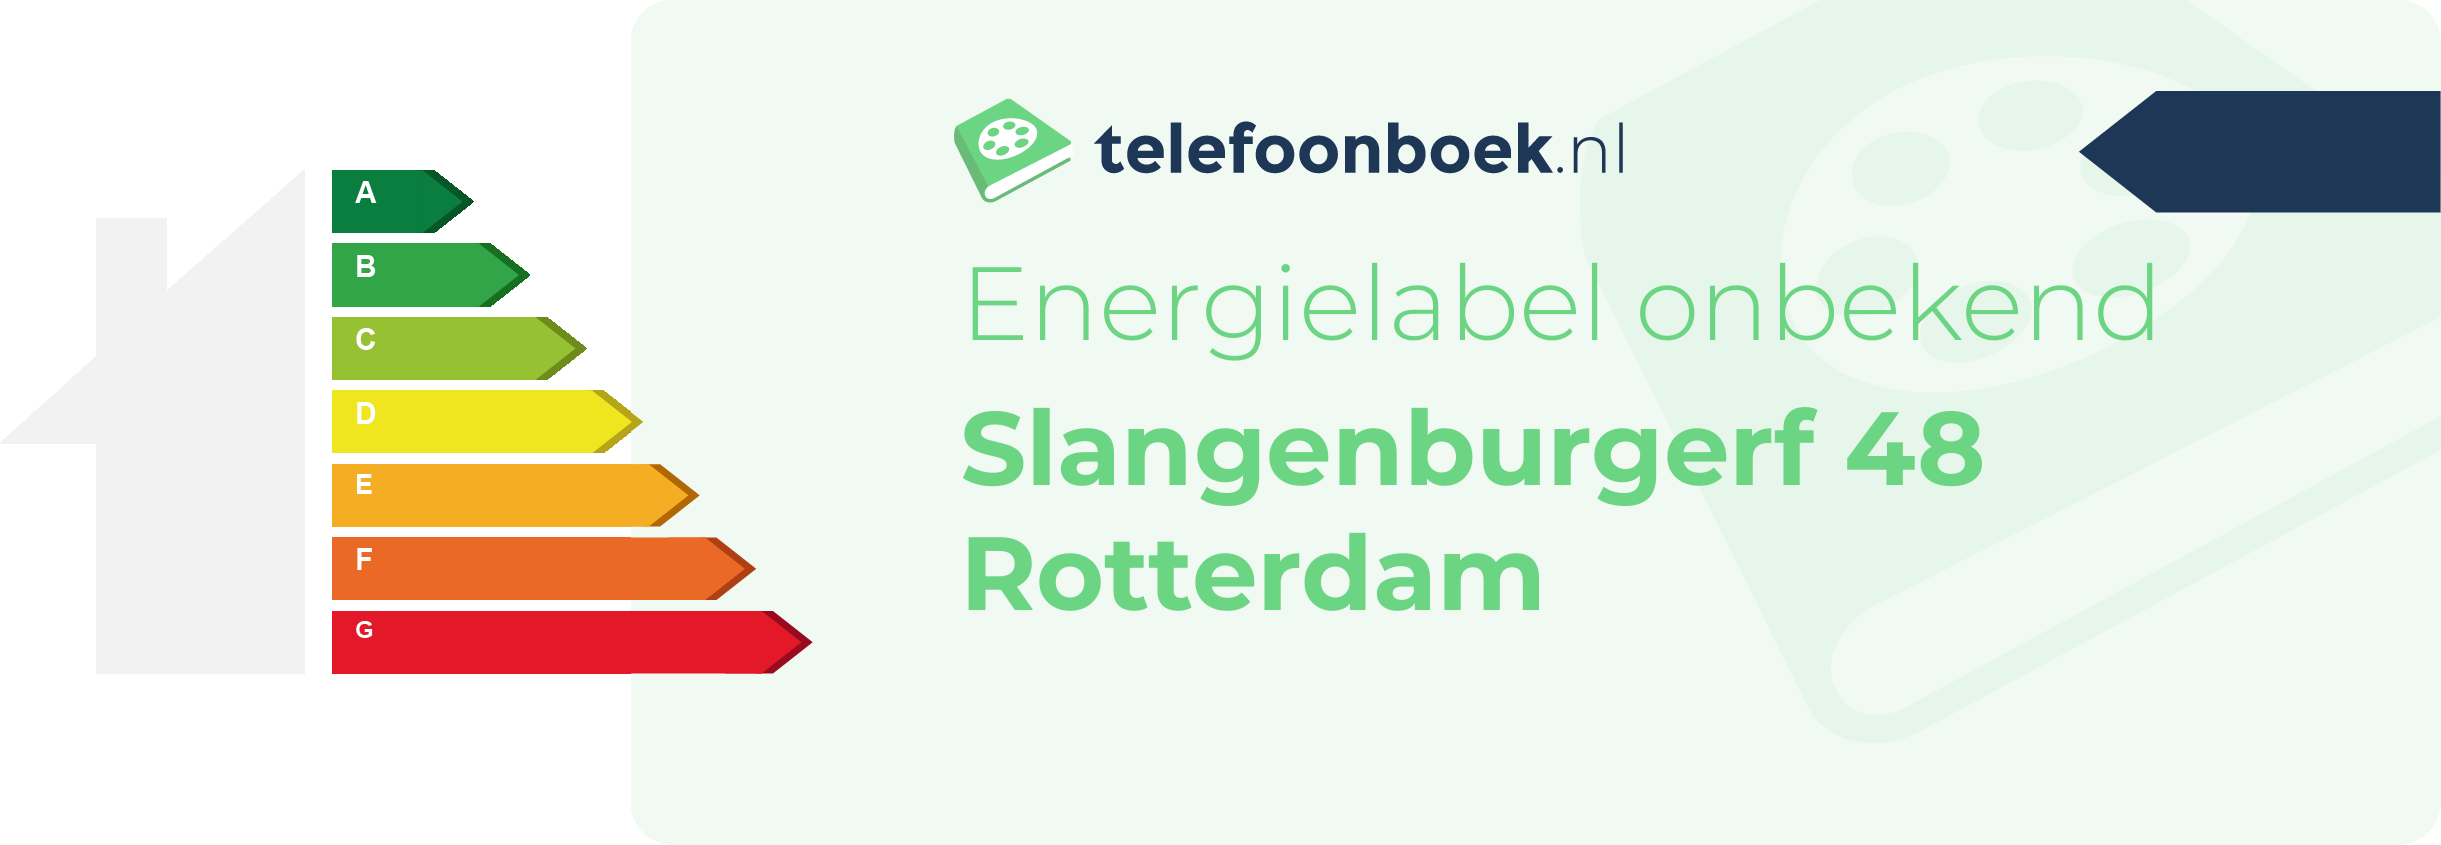 Energielabel Slangenburgerf 48 Rotterdam